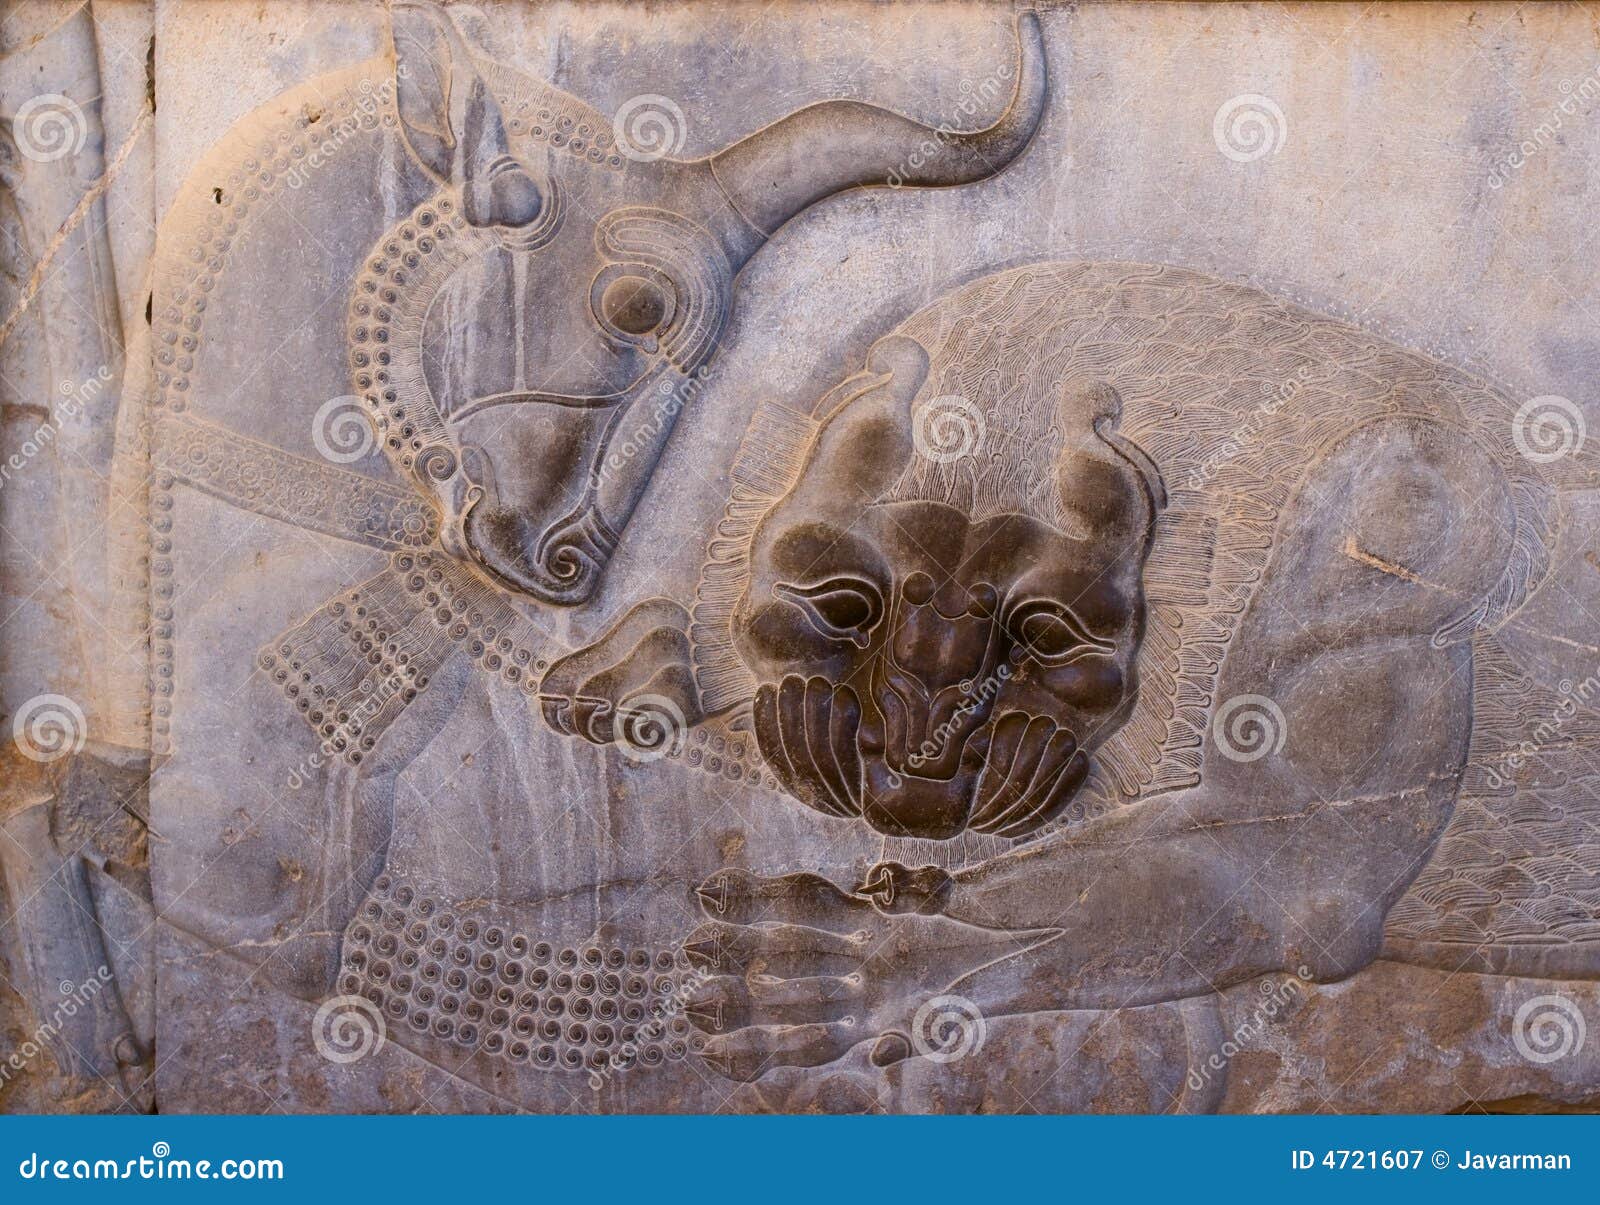 ancient bas-reliefs of persepolis